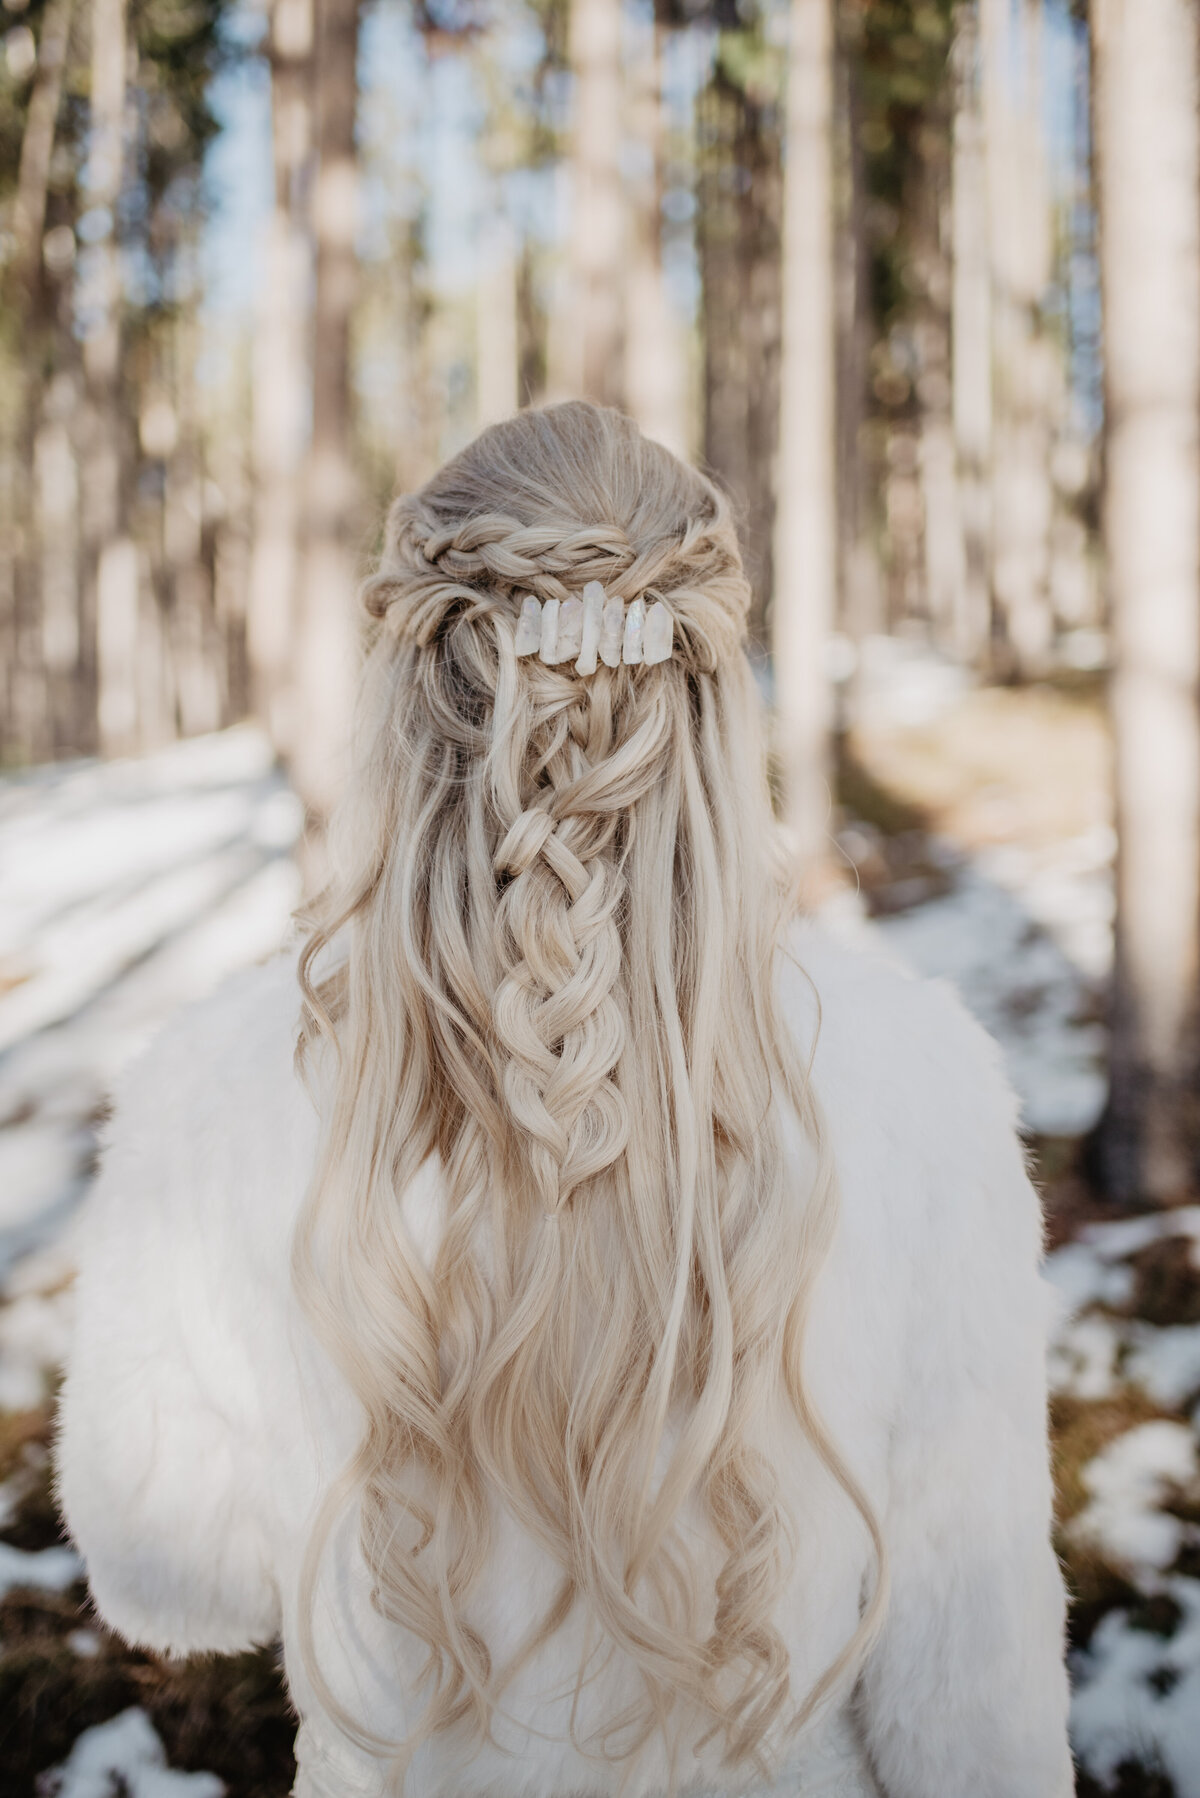 Jackson Hole Photographers capture bridal hair